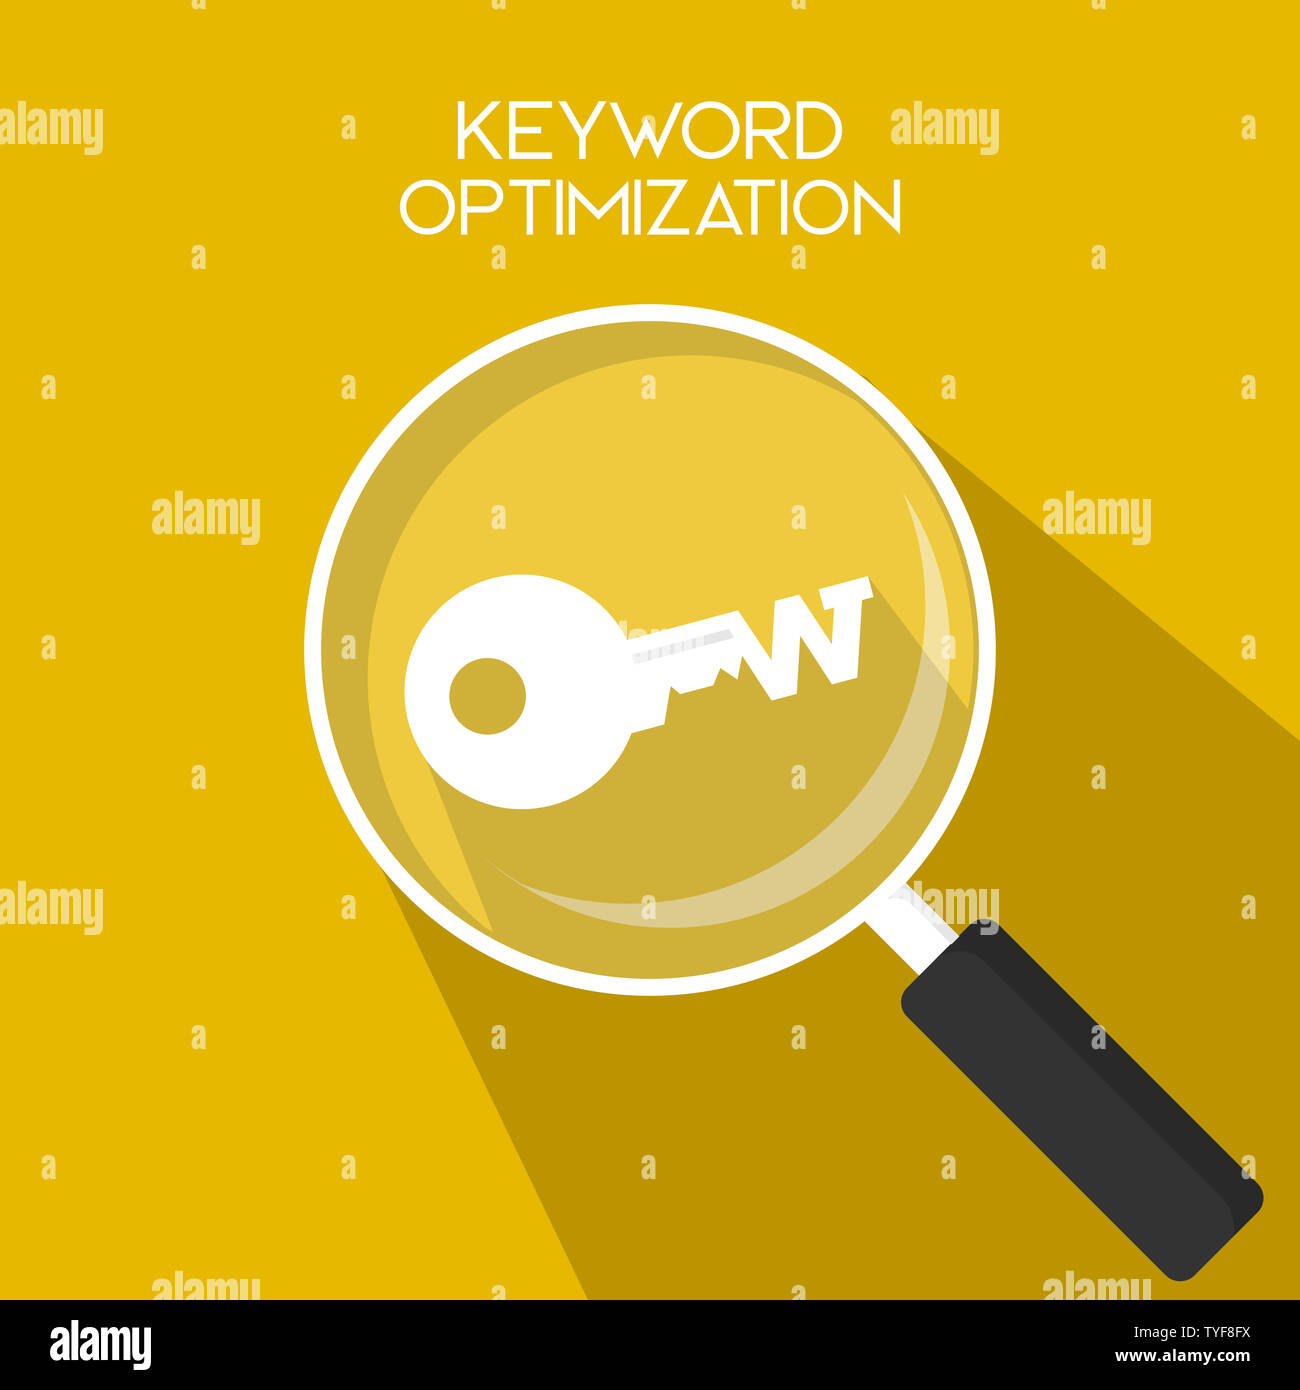 https www alamy com keywording optimization seo keyword research keywords ranking optimization on search engine long shadow simple key icon flat vector illustration image257876862 html